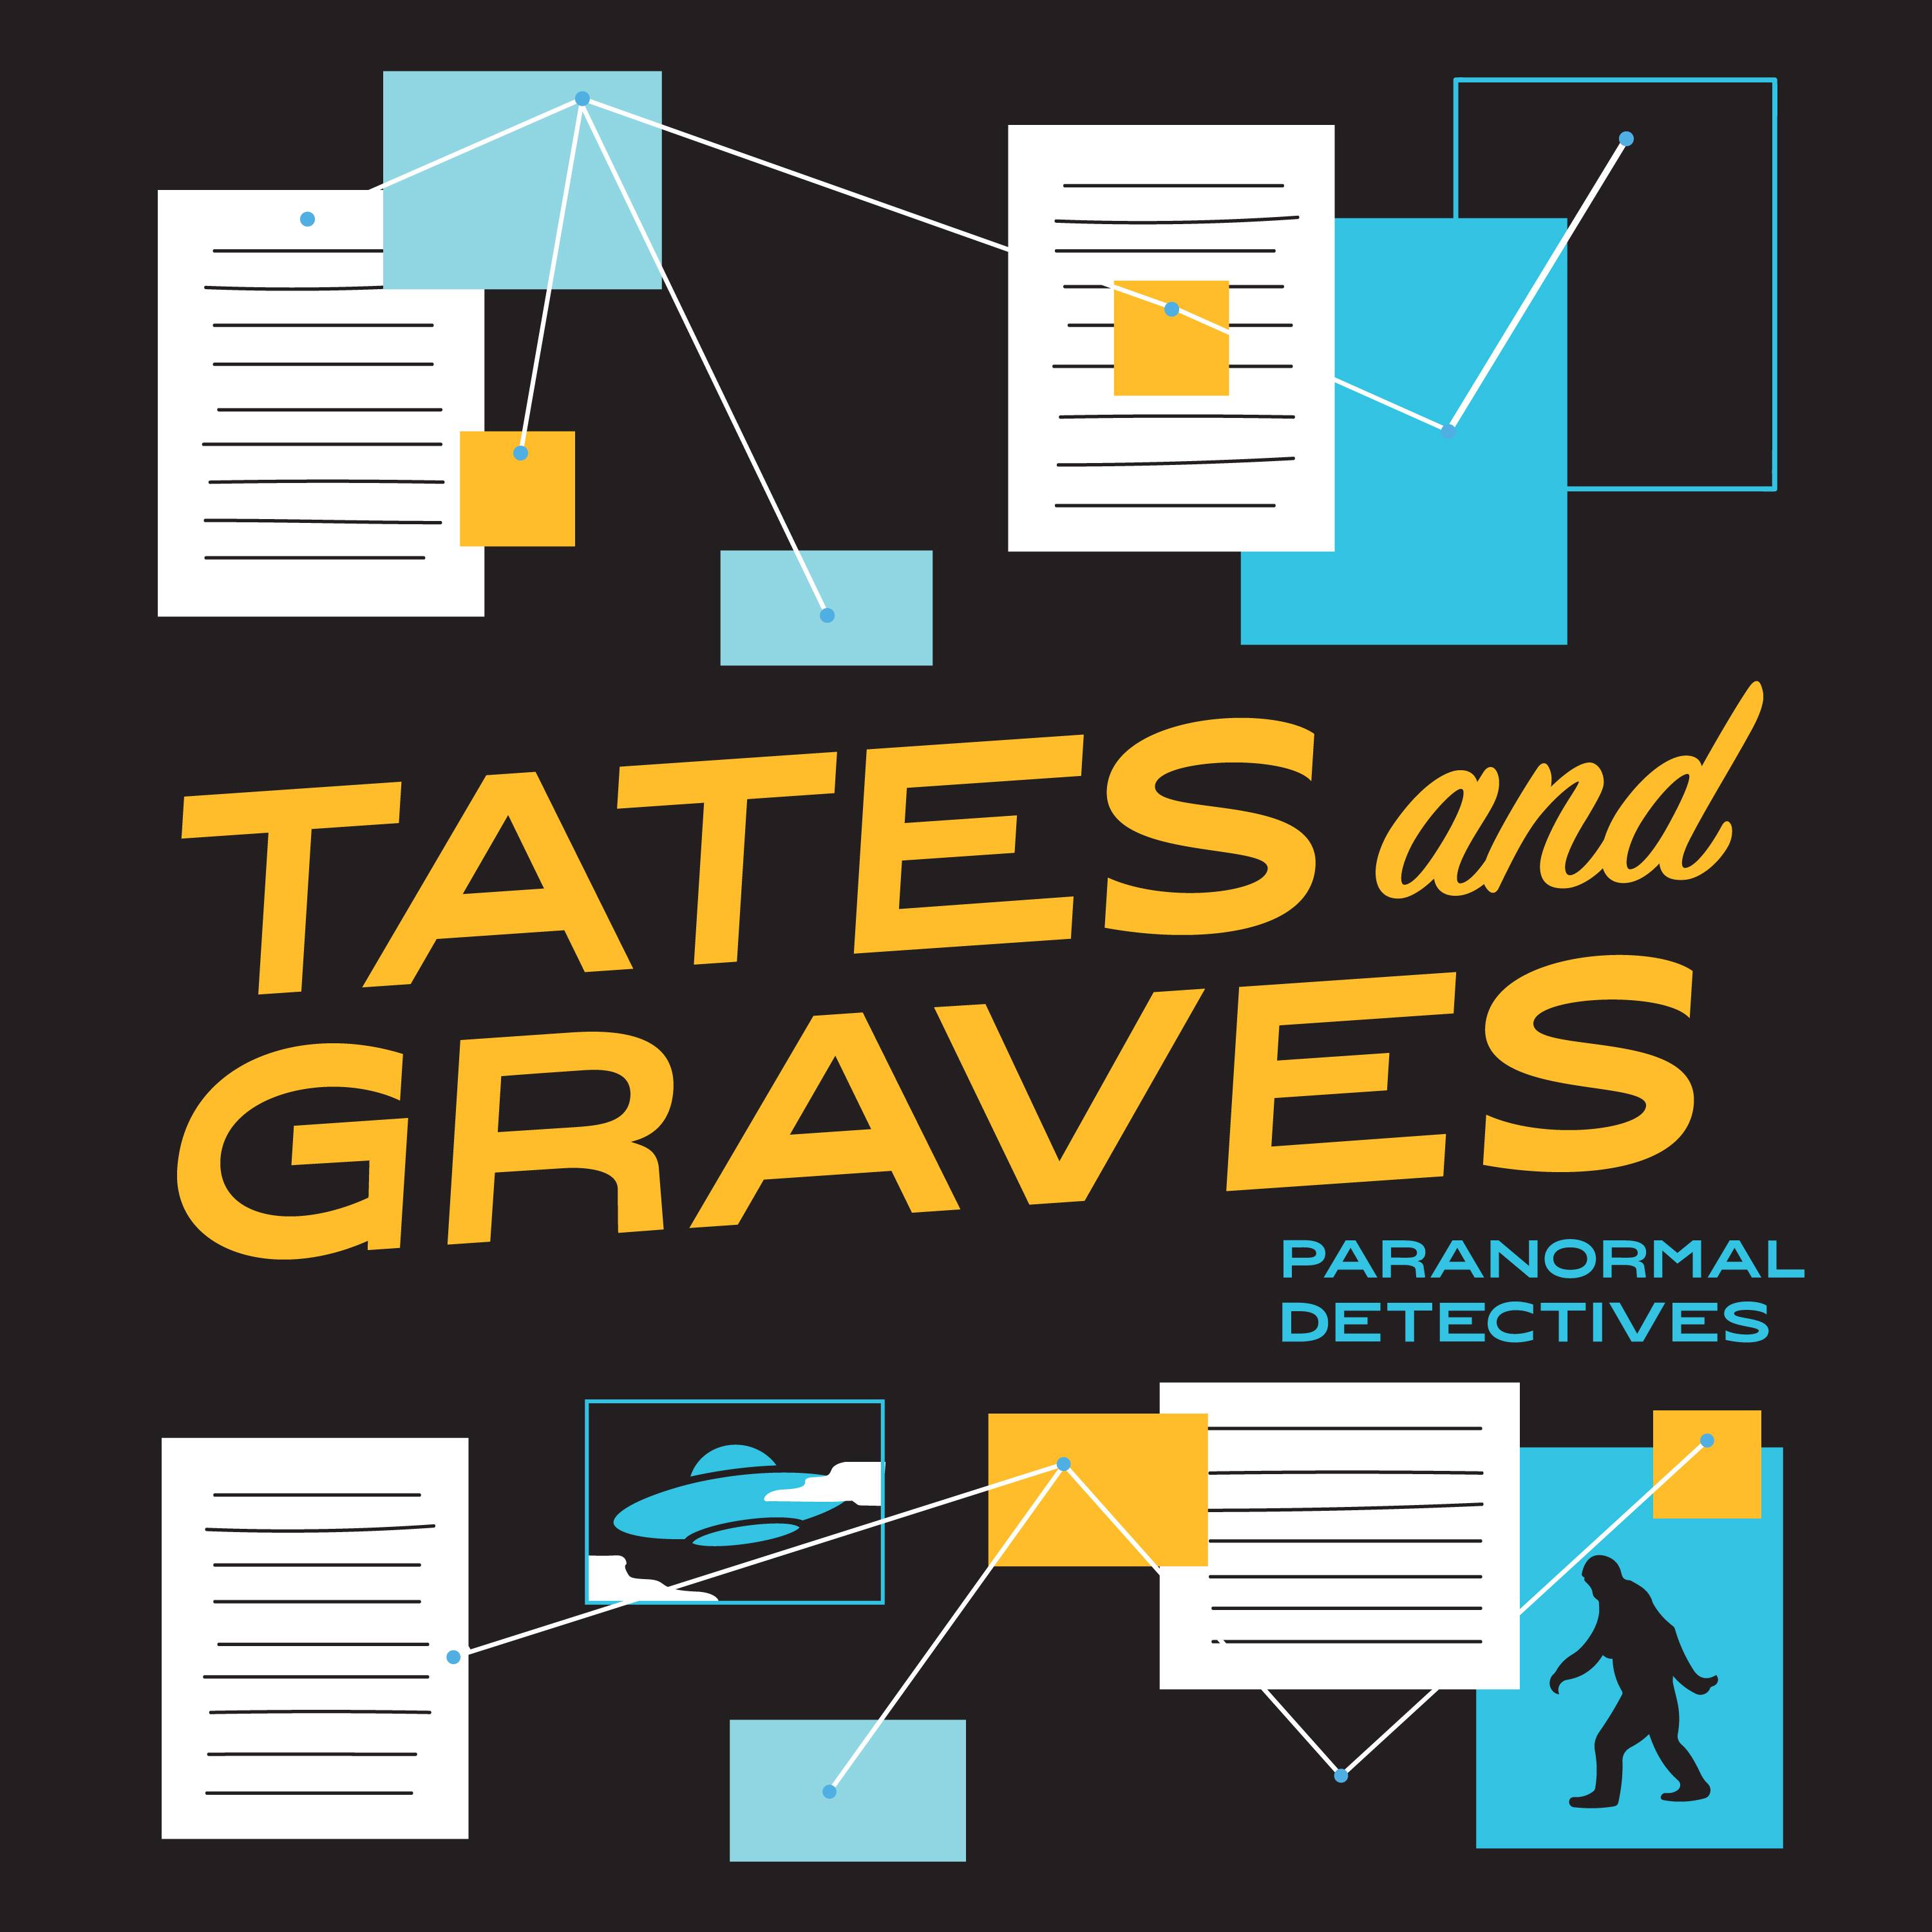 Tates and Graves: Paranormal Detectives